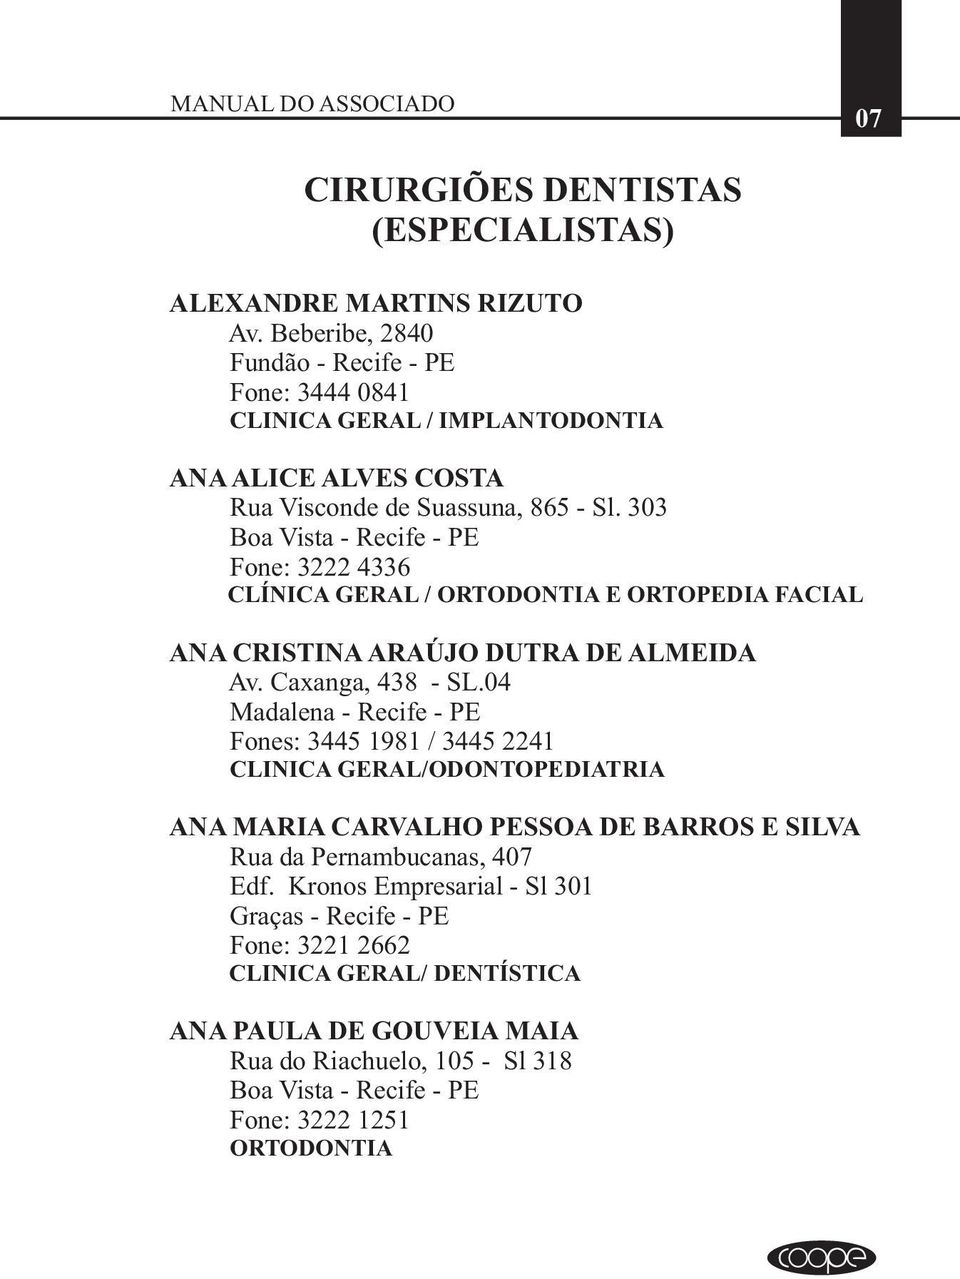 303 Fone: 3222 4336 / ORTODONTIA E ORTOPEDIA FACIAL ANA CRISTINA ARAÚJO DUTRA DE ALMEIDA Av. Caxanga, 438 - SL.